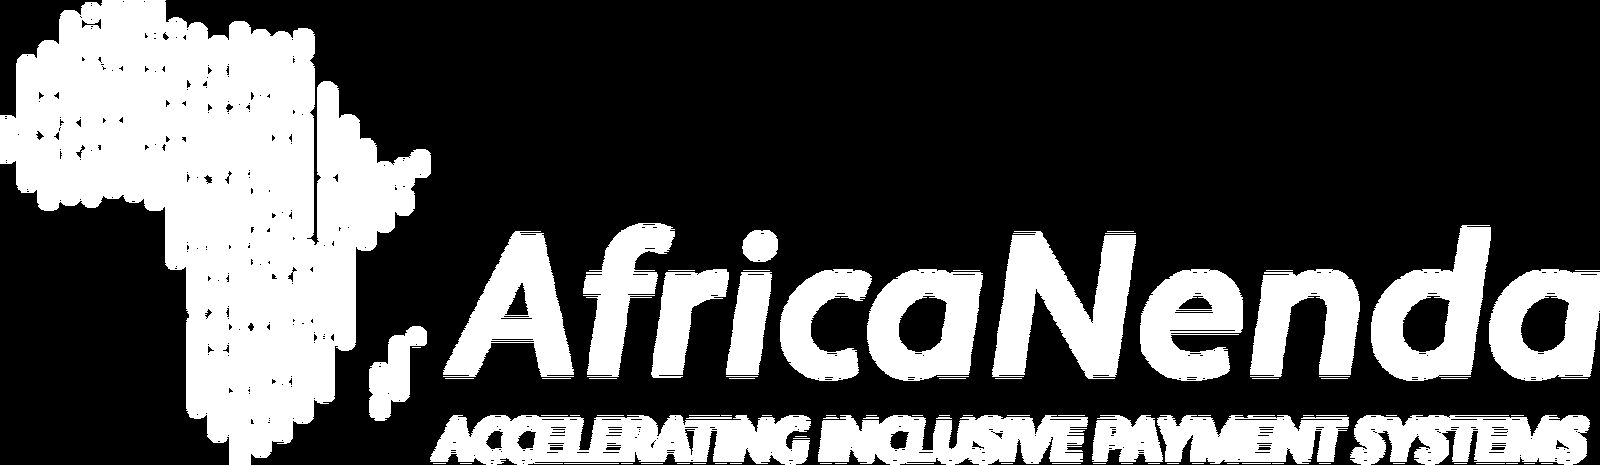 Africa Nenda White logo